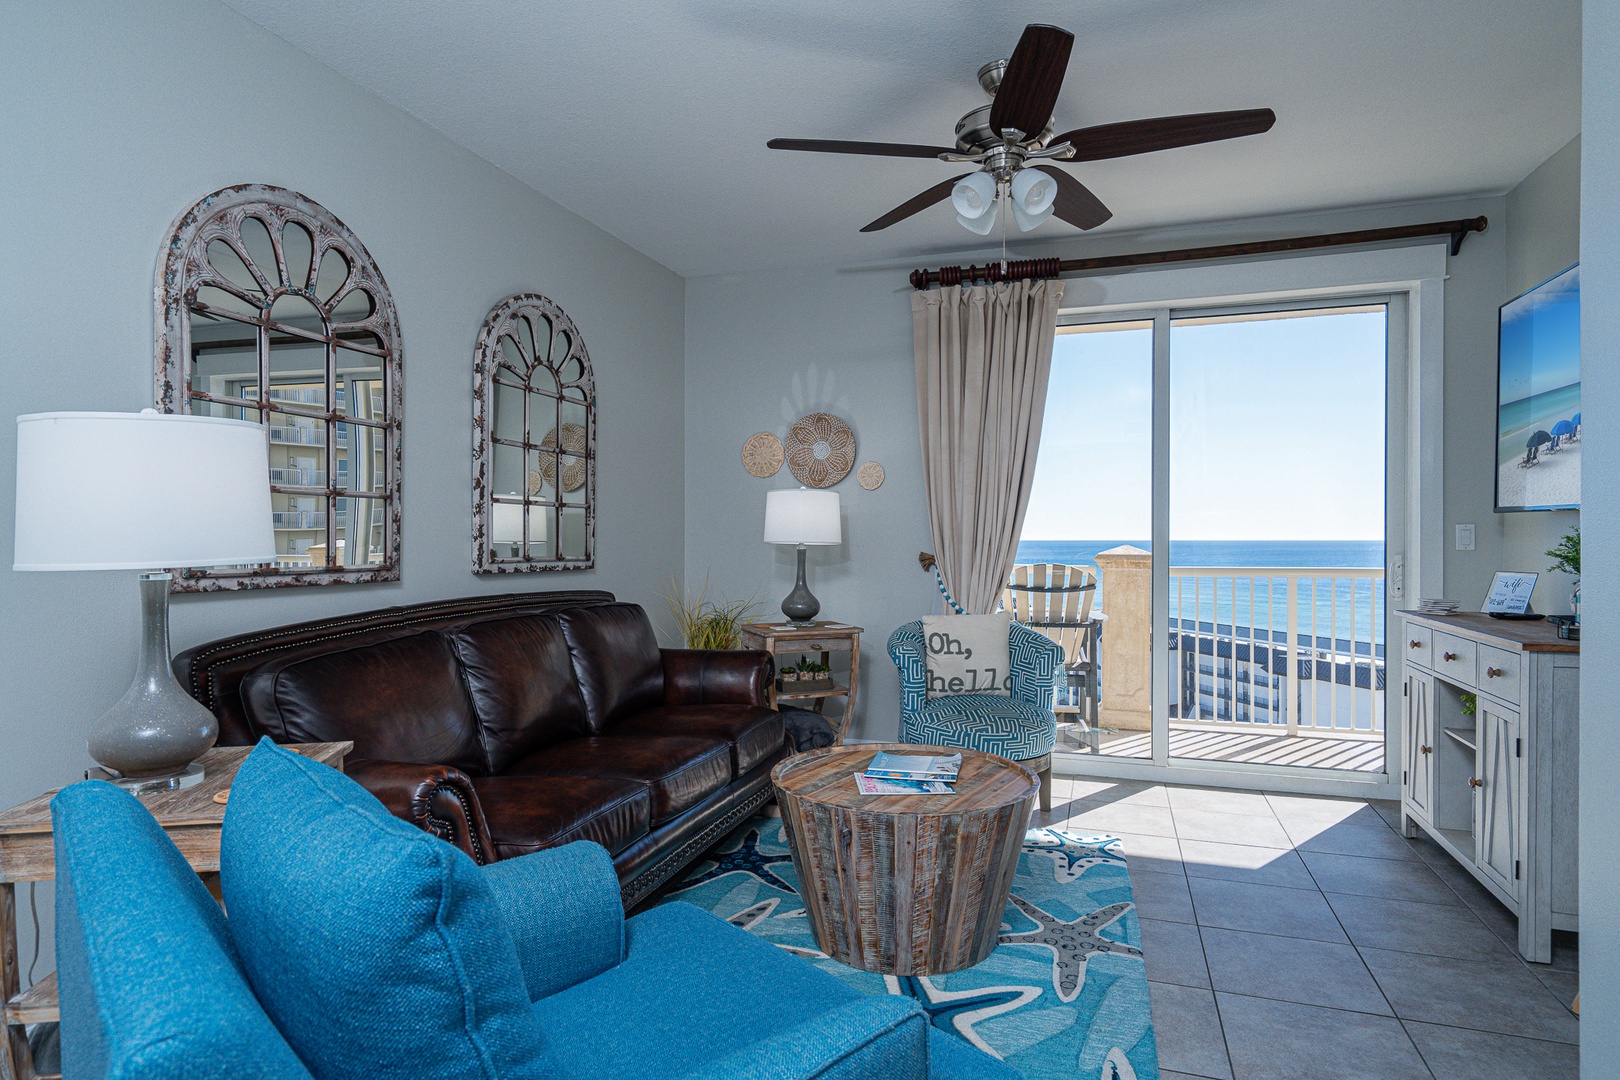 Coastal comfort meets modern elegance in the beach-inspired living room